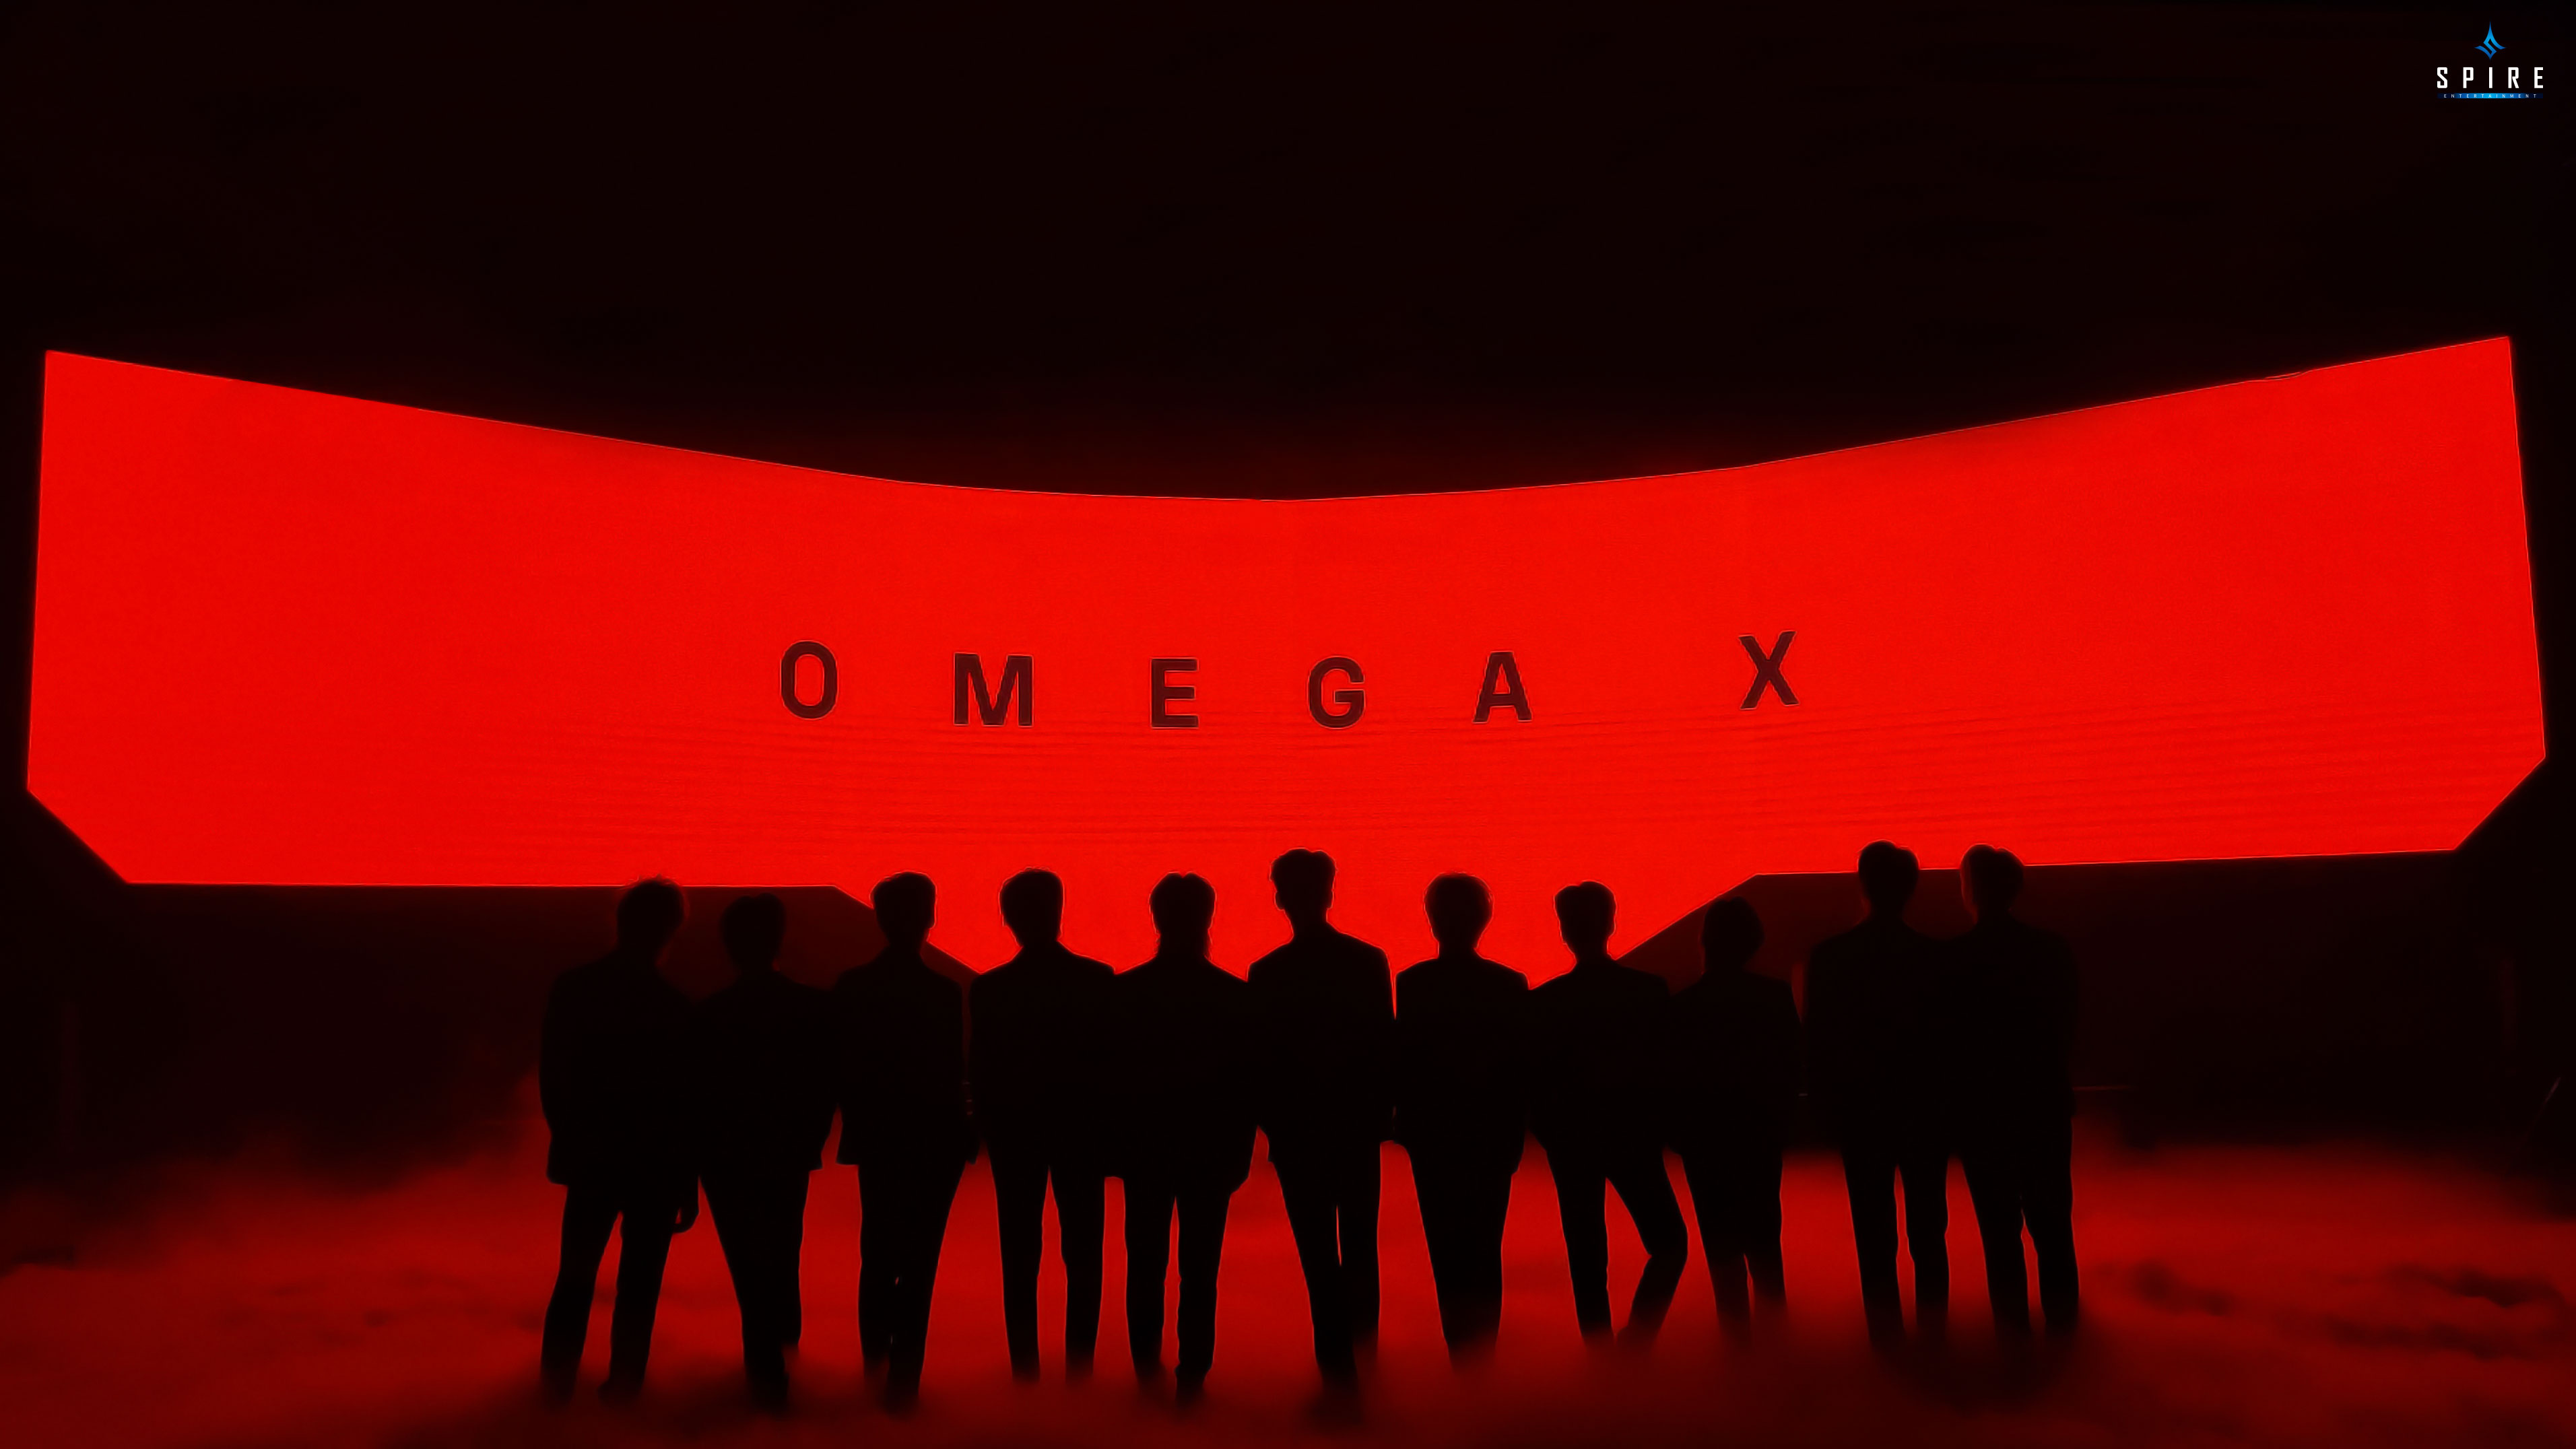 OMEGA X Official - 'OMEGA X' 2021. 03. 15 12AM (KST) COMING SOON #OMEGA_X #오메가엑스 #NEW #BOYGROUP #스파이어엔터테인먼트